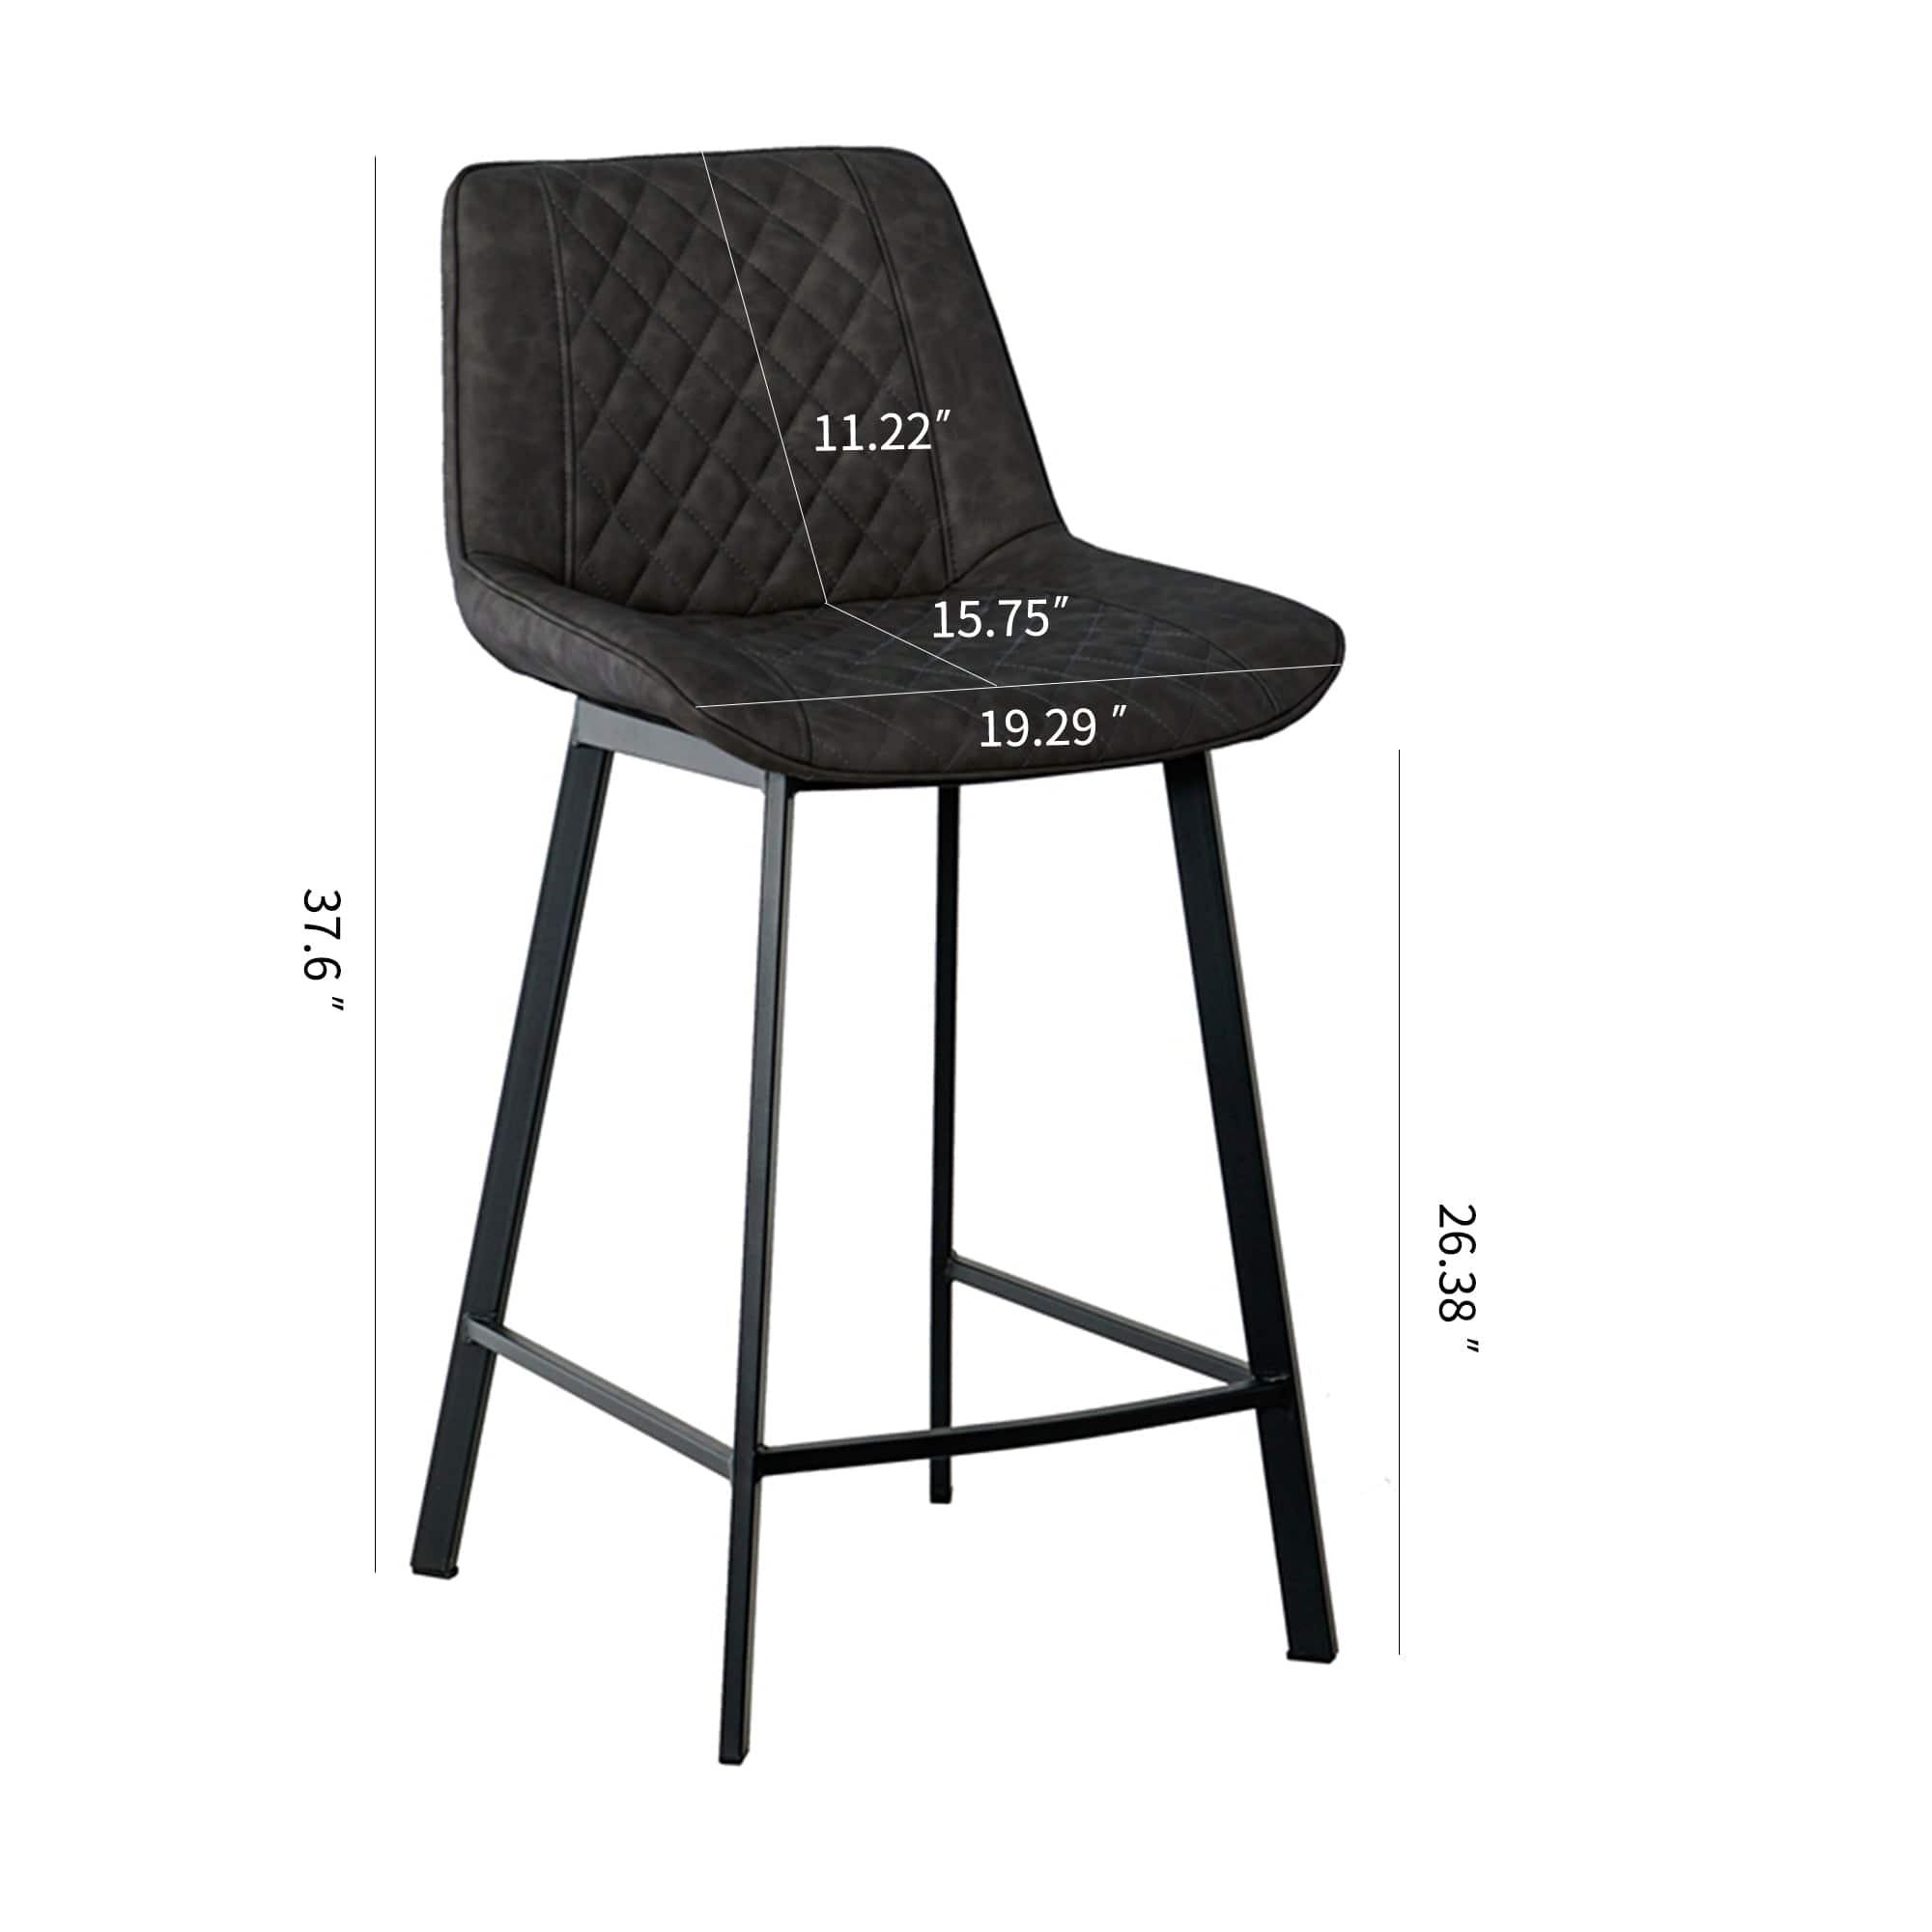 Shop High quality modern cheap high bar stool Upholstered soft dark brown pu Leather bar chair(set of 2) Mademoiselle Home Decor